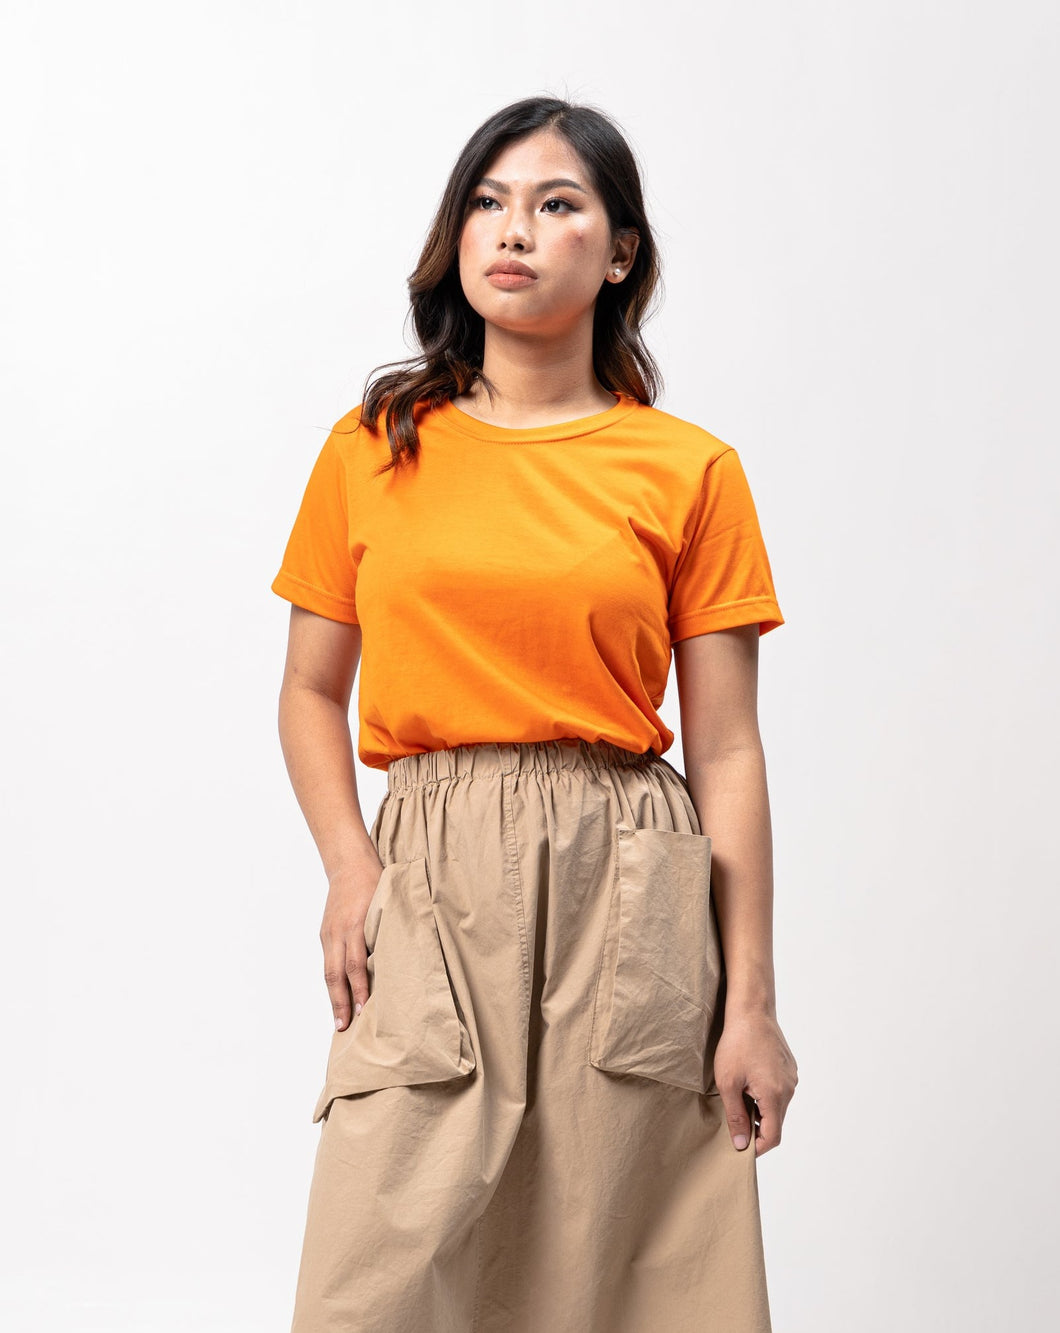 Popsicle Orange Sun Plain Women's T-Shirt